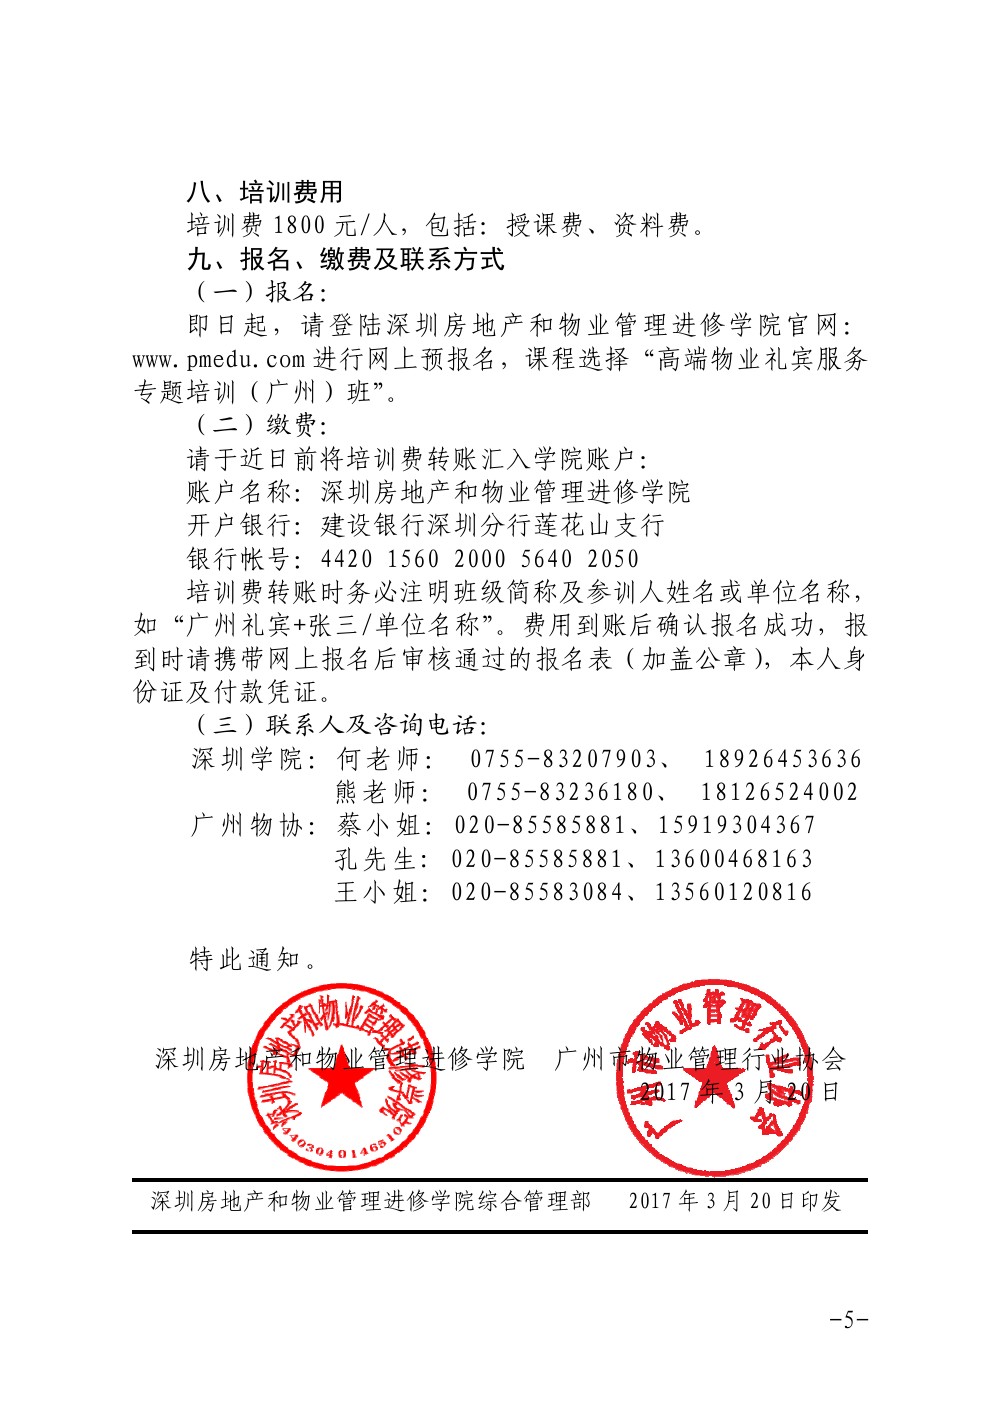 4118ccm云顶集团在广州举办高端物业礼宾服务专题培训班的通知5-深圳物管4118ccm云顶集团